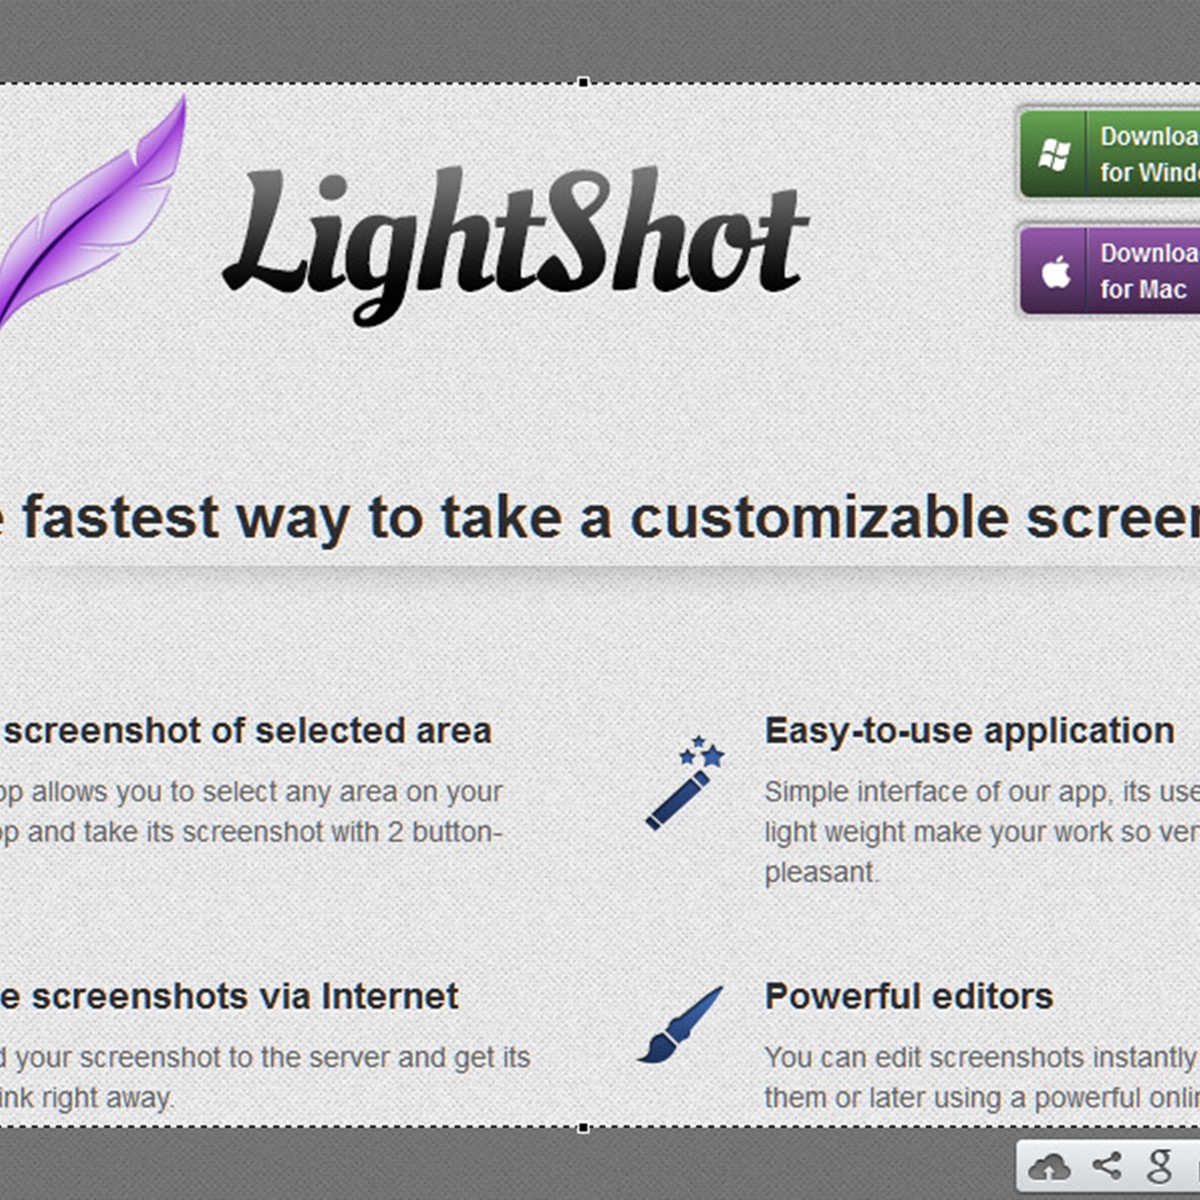 Lightshot screen capture download for android